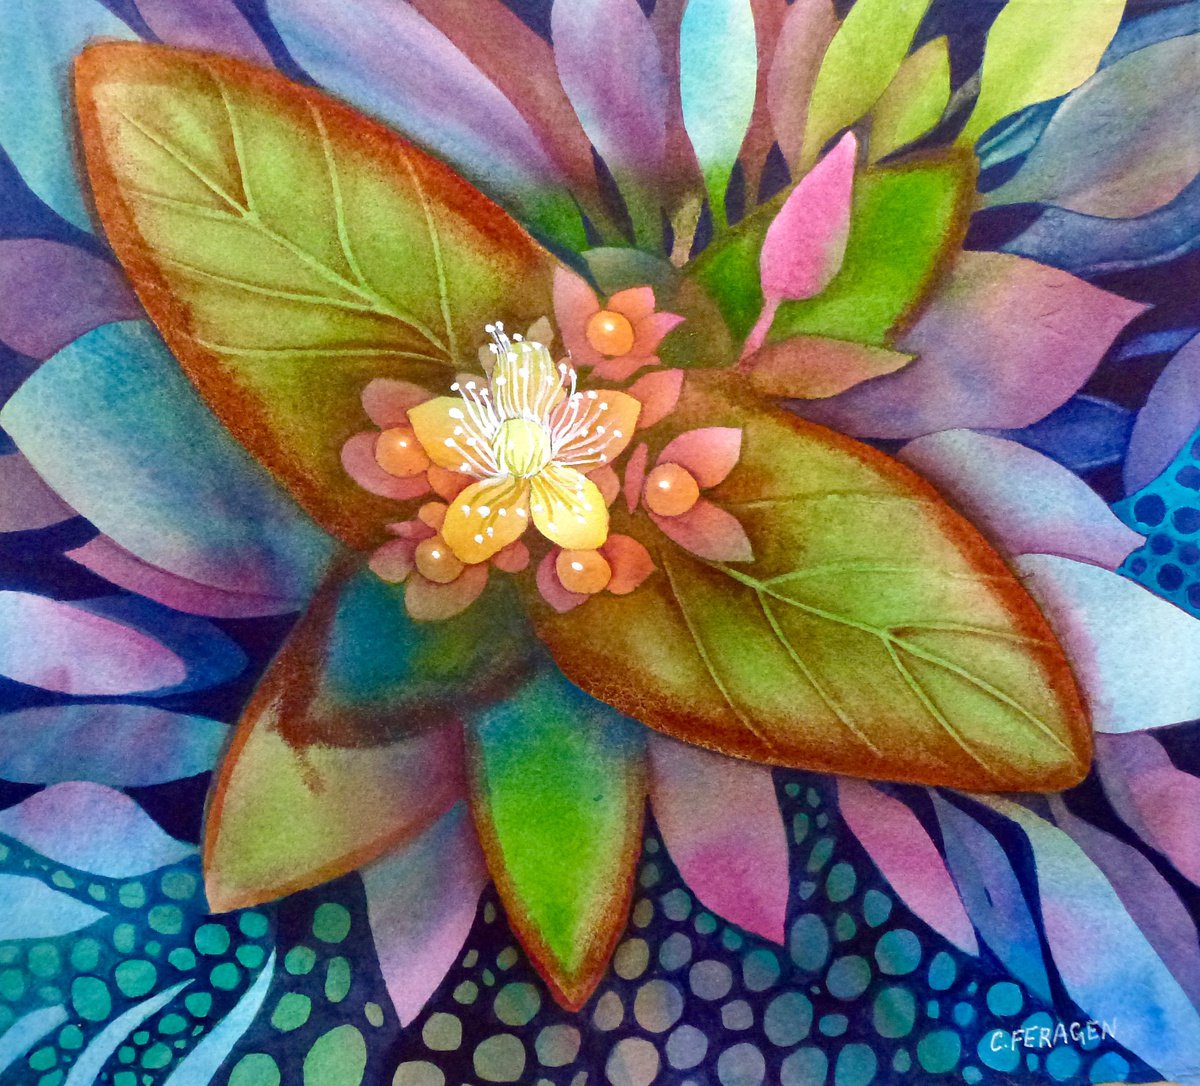 Abstract Flower #4 by Cheryl Feragen